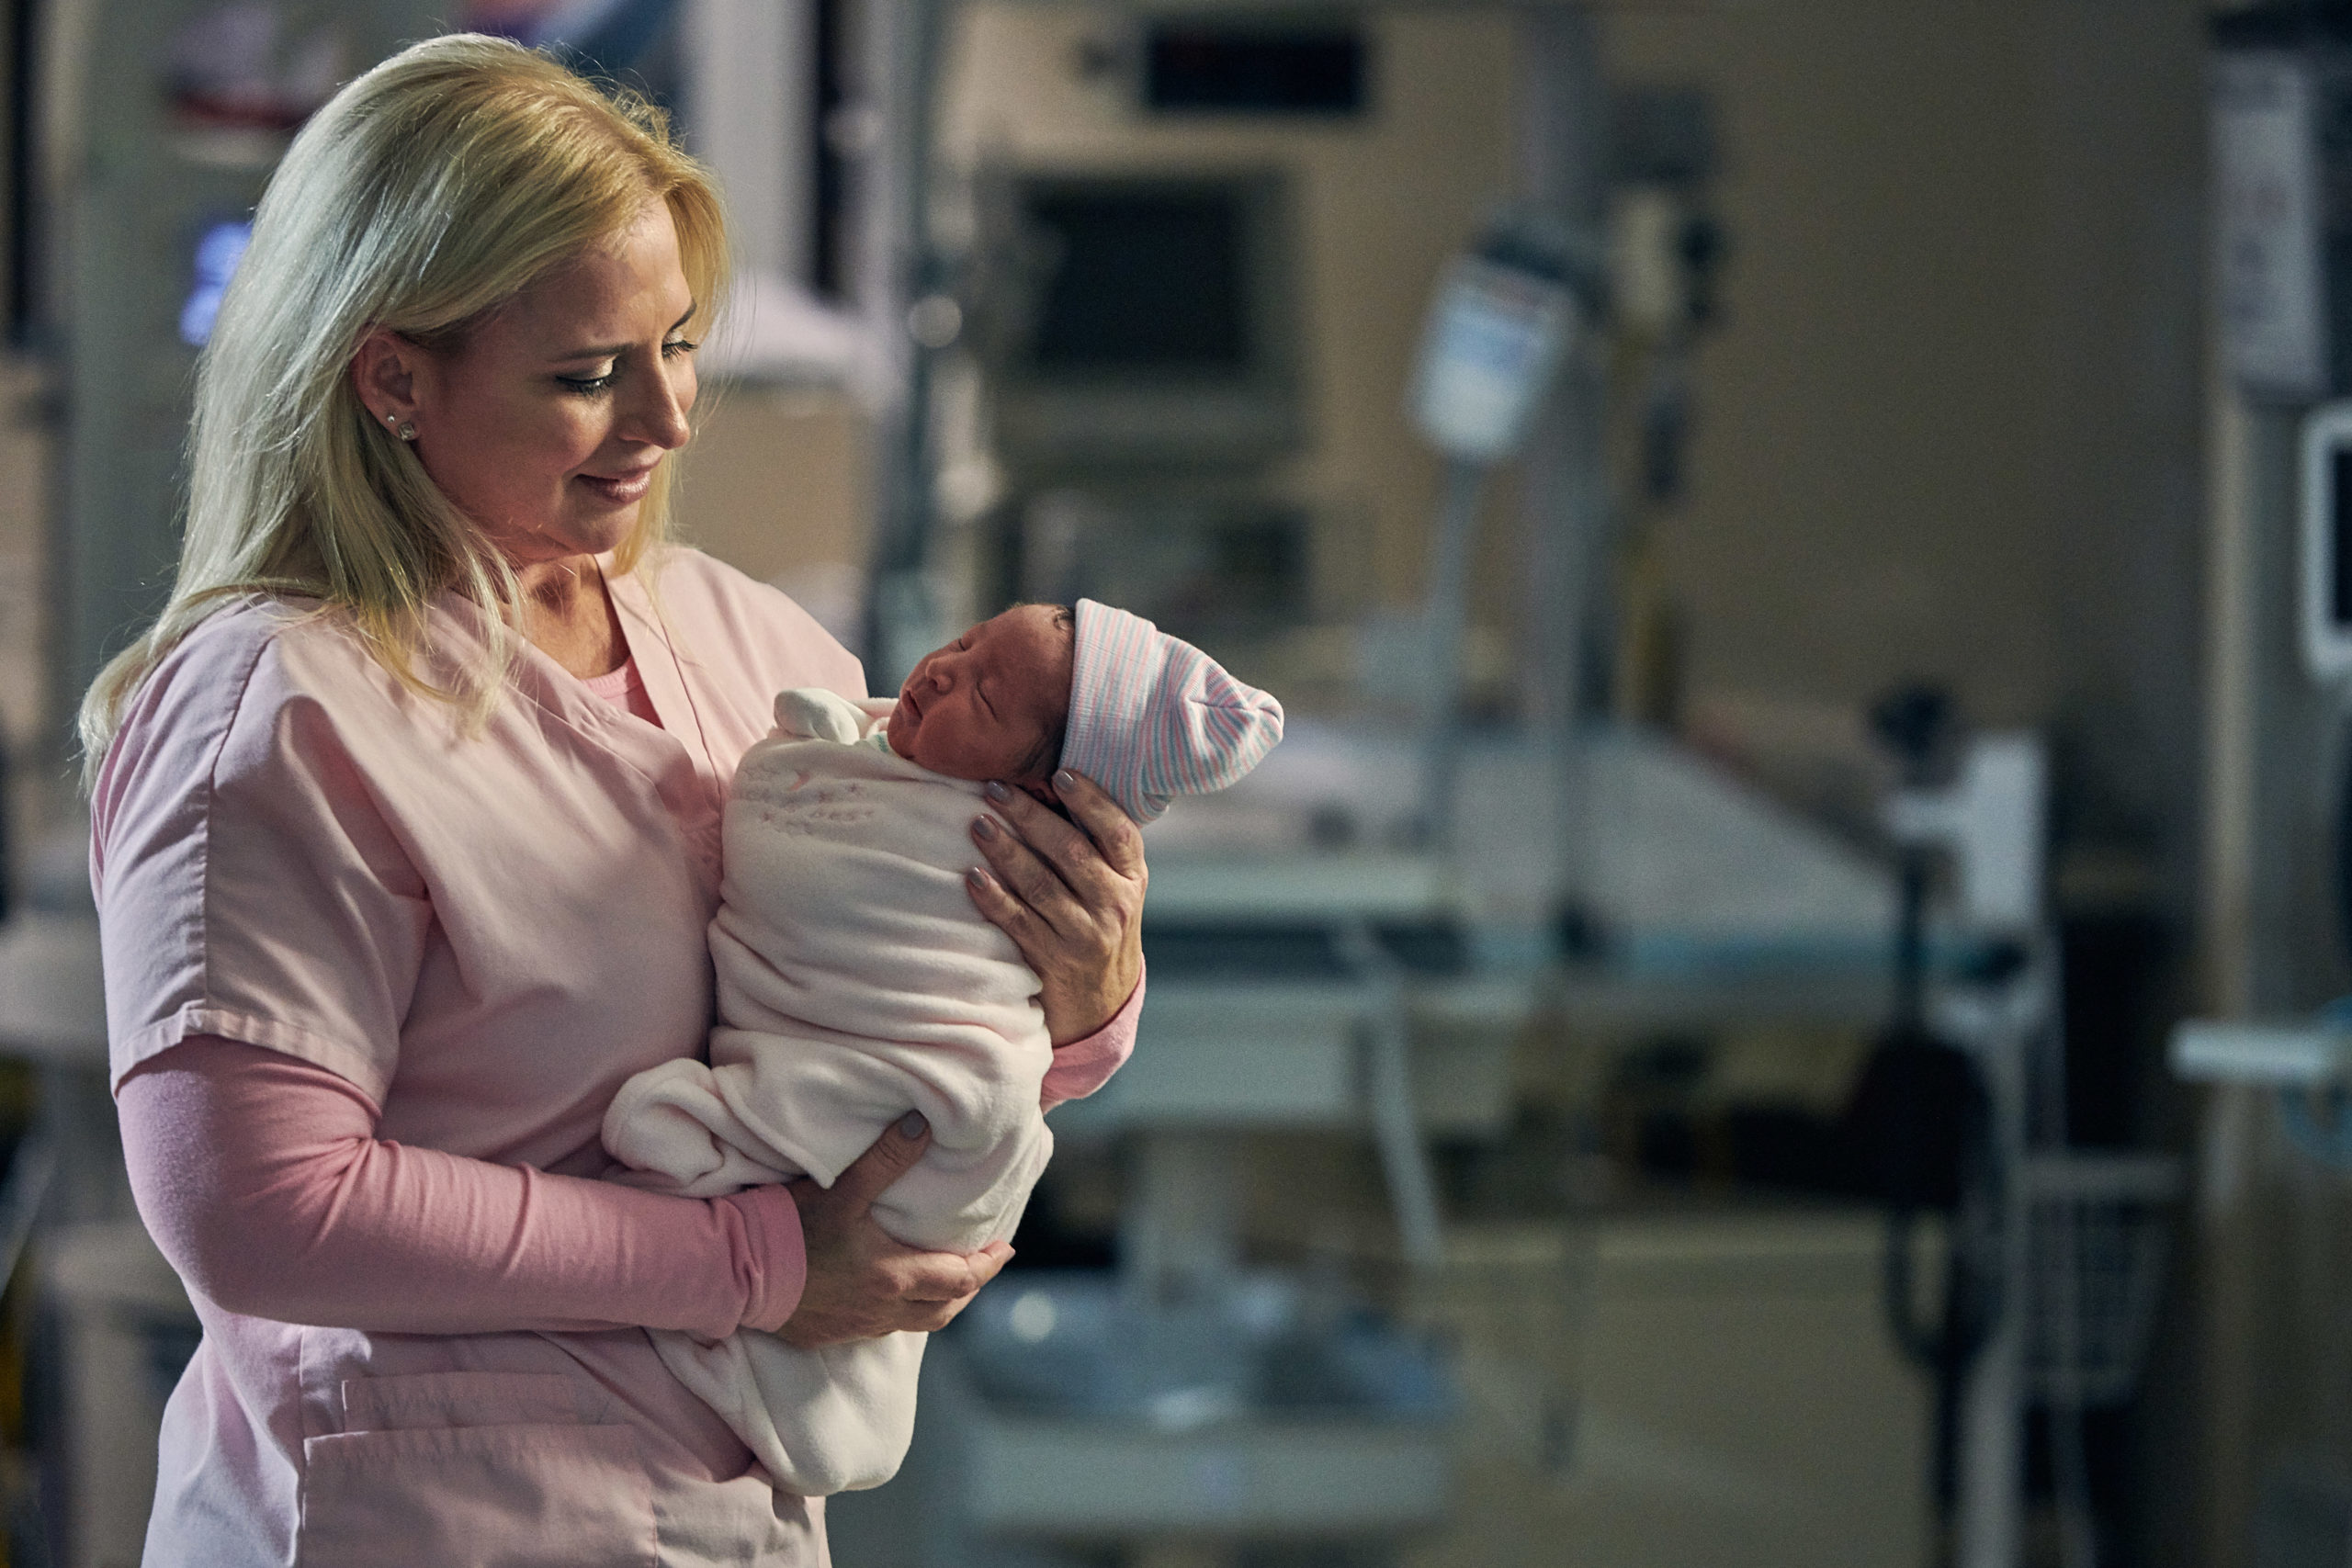 A female nurse holds a newborn baby